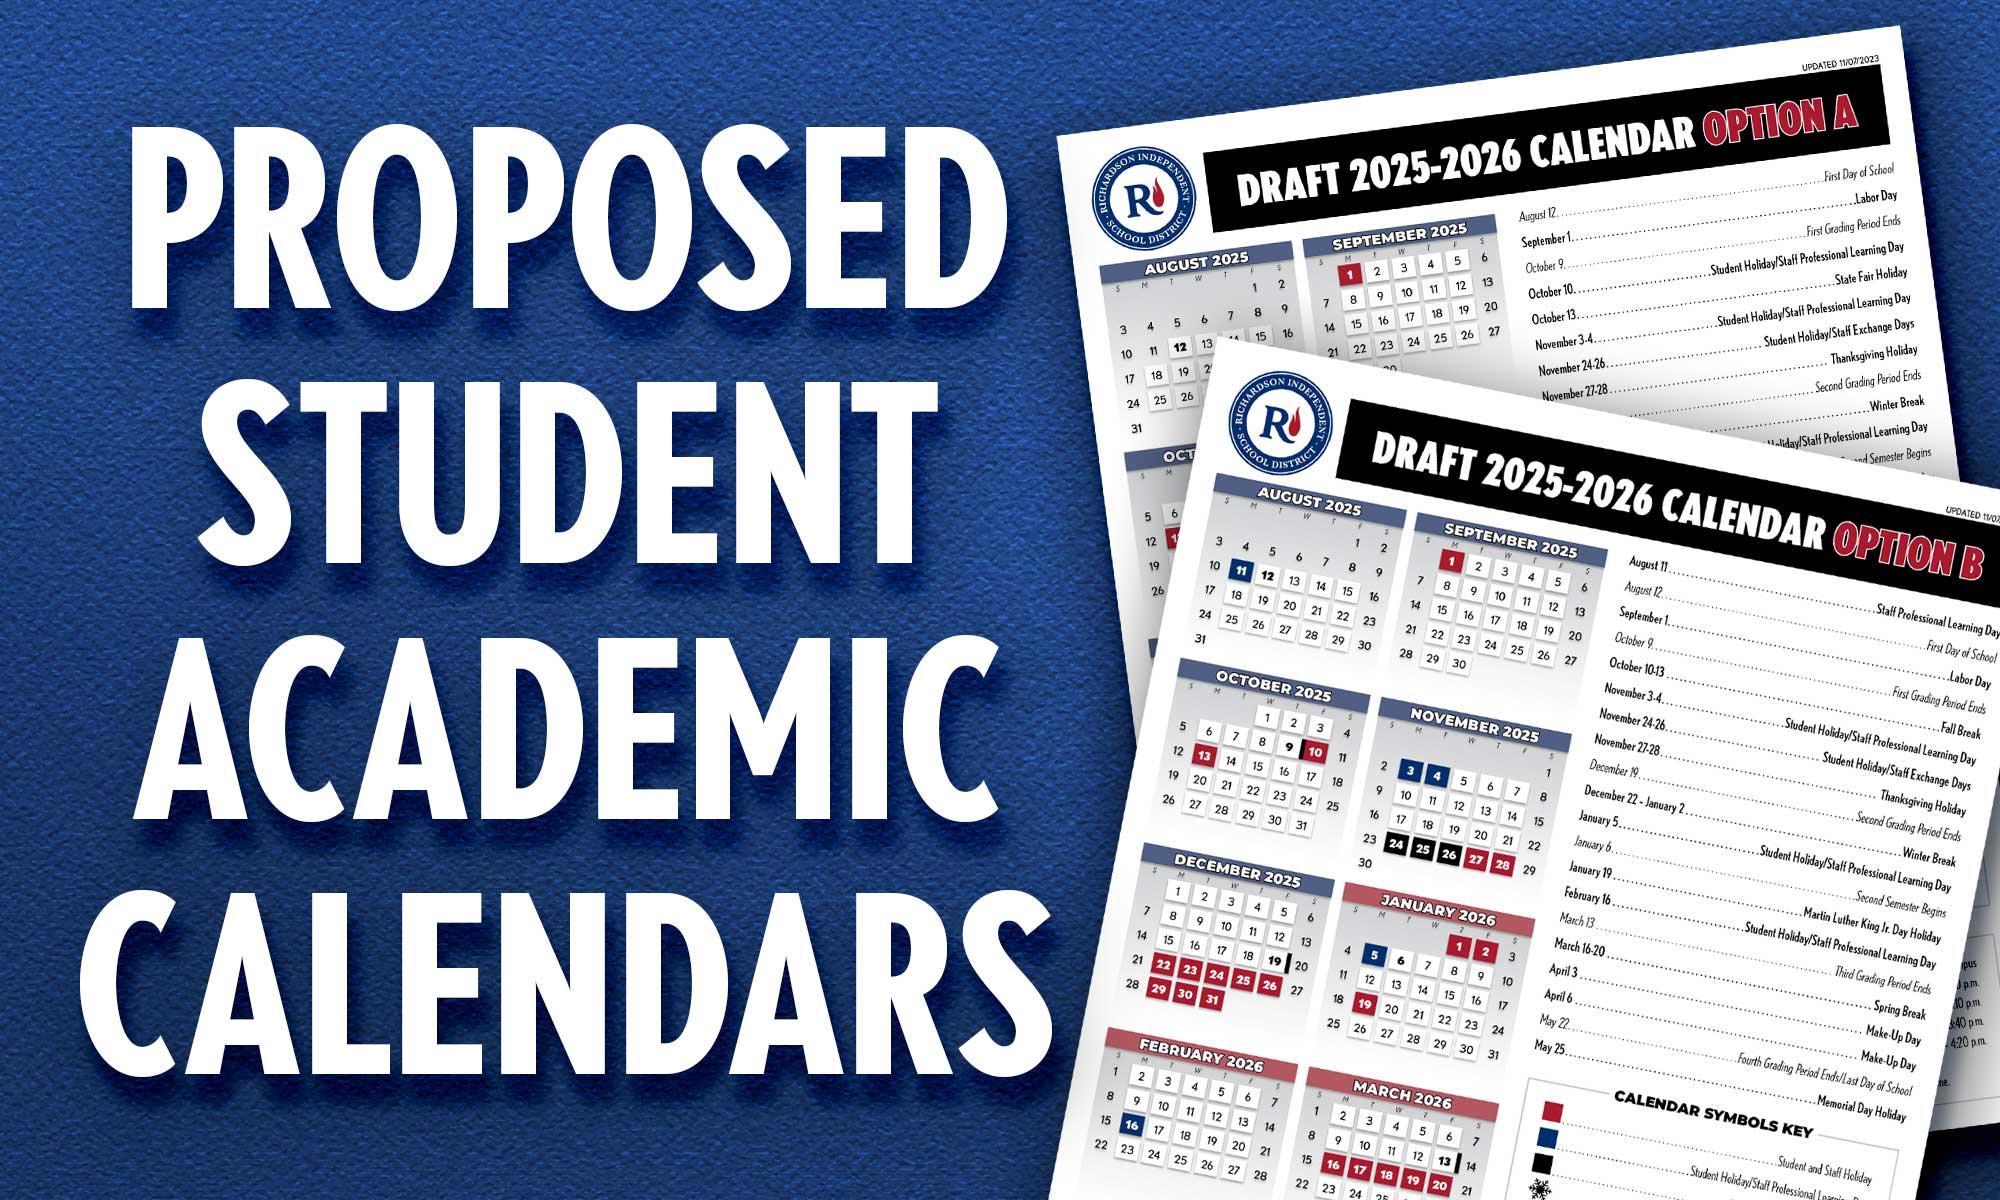 Proposed Student Academic Calendars 2025-26